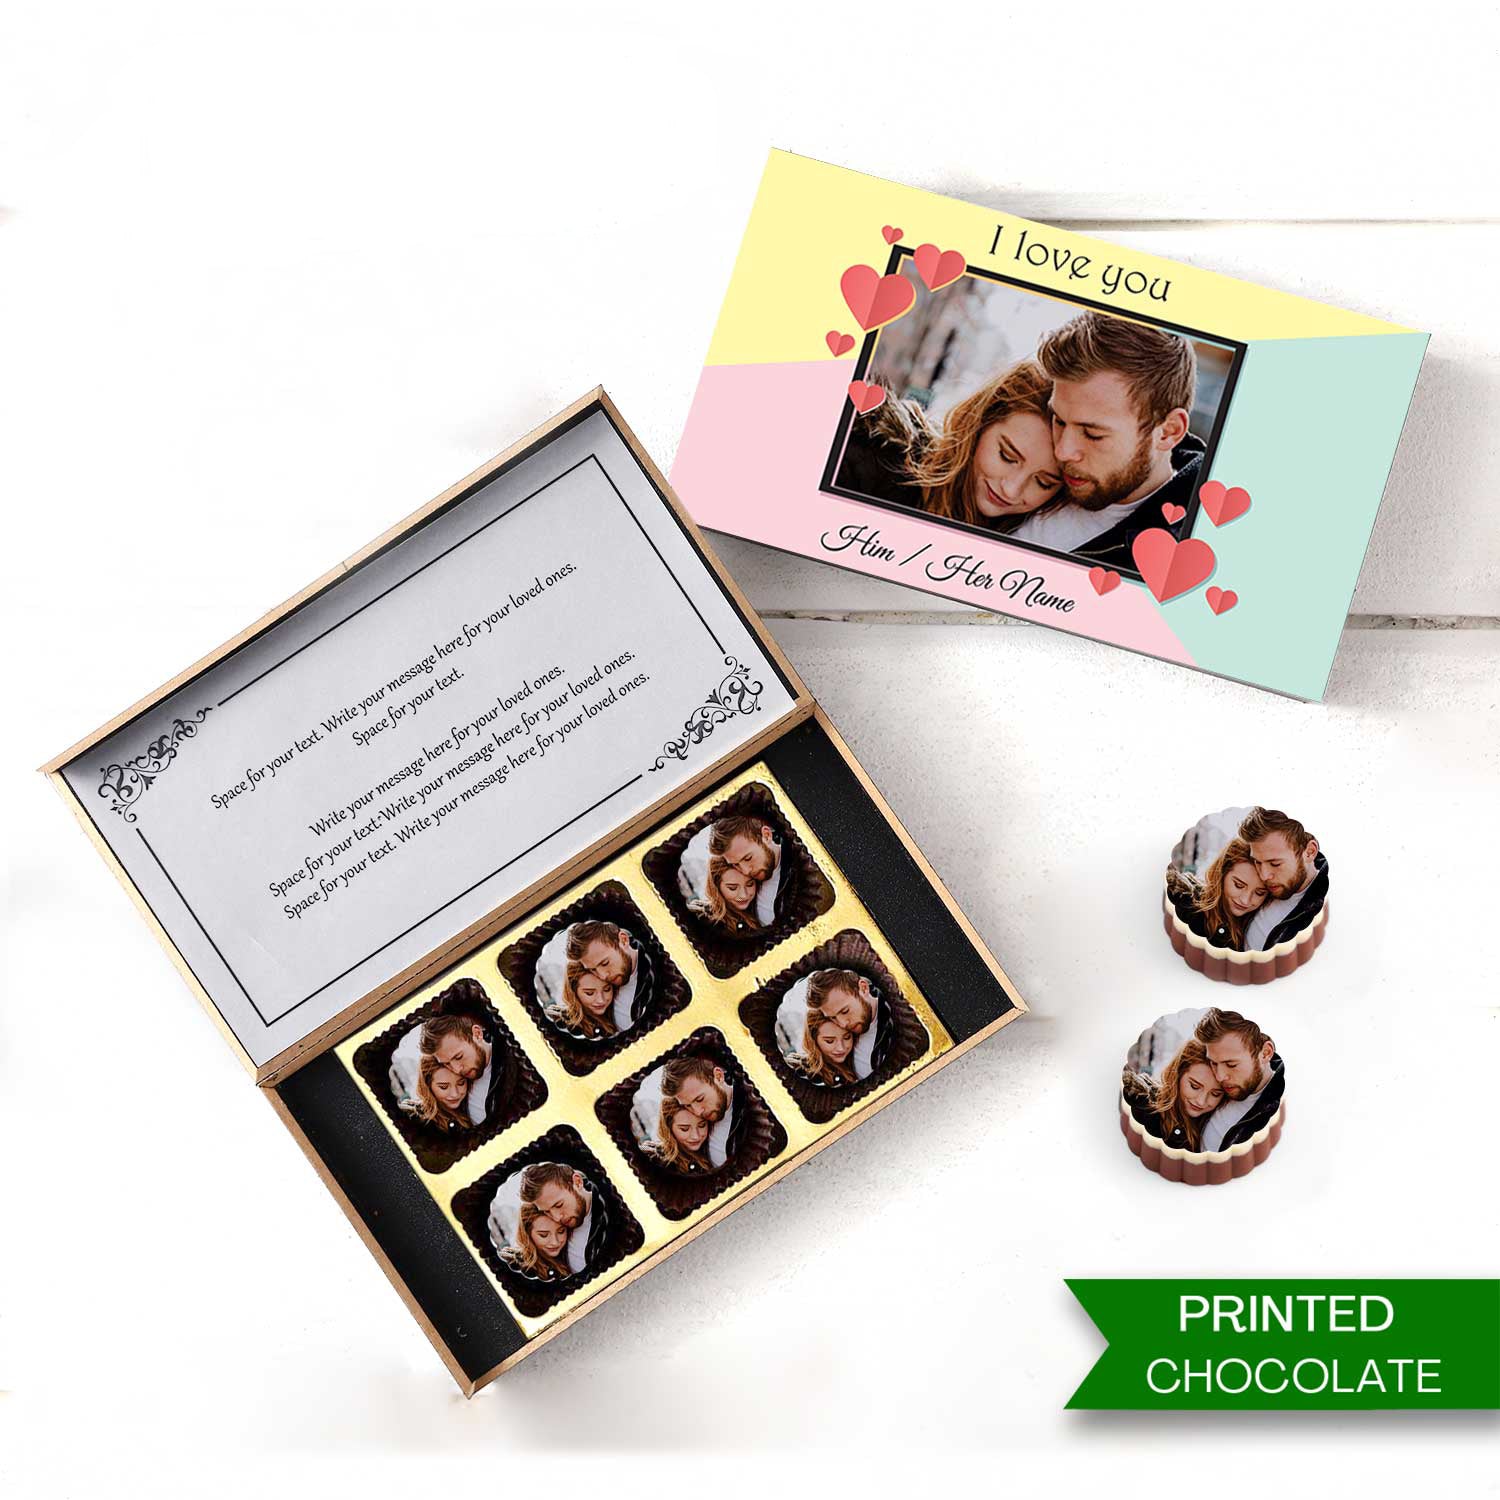 Personalized I love you Chocolate Gifts Box - Choco ManualART